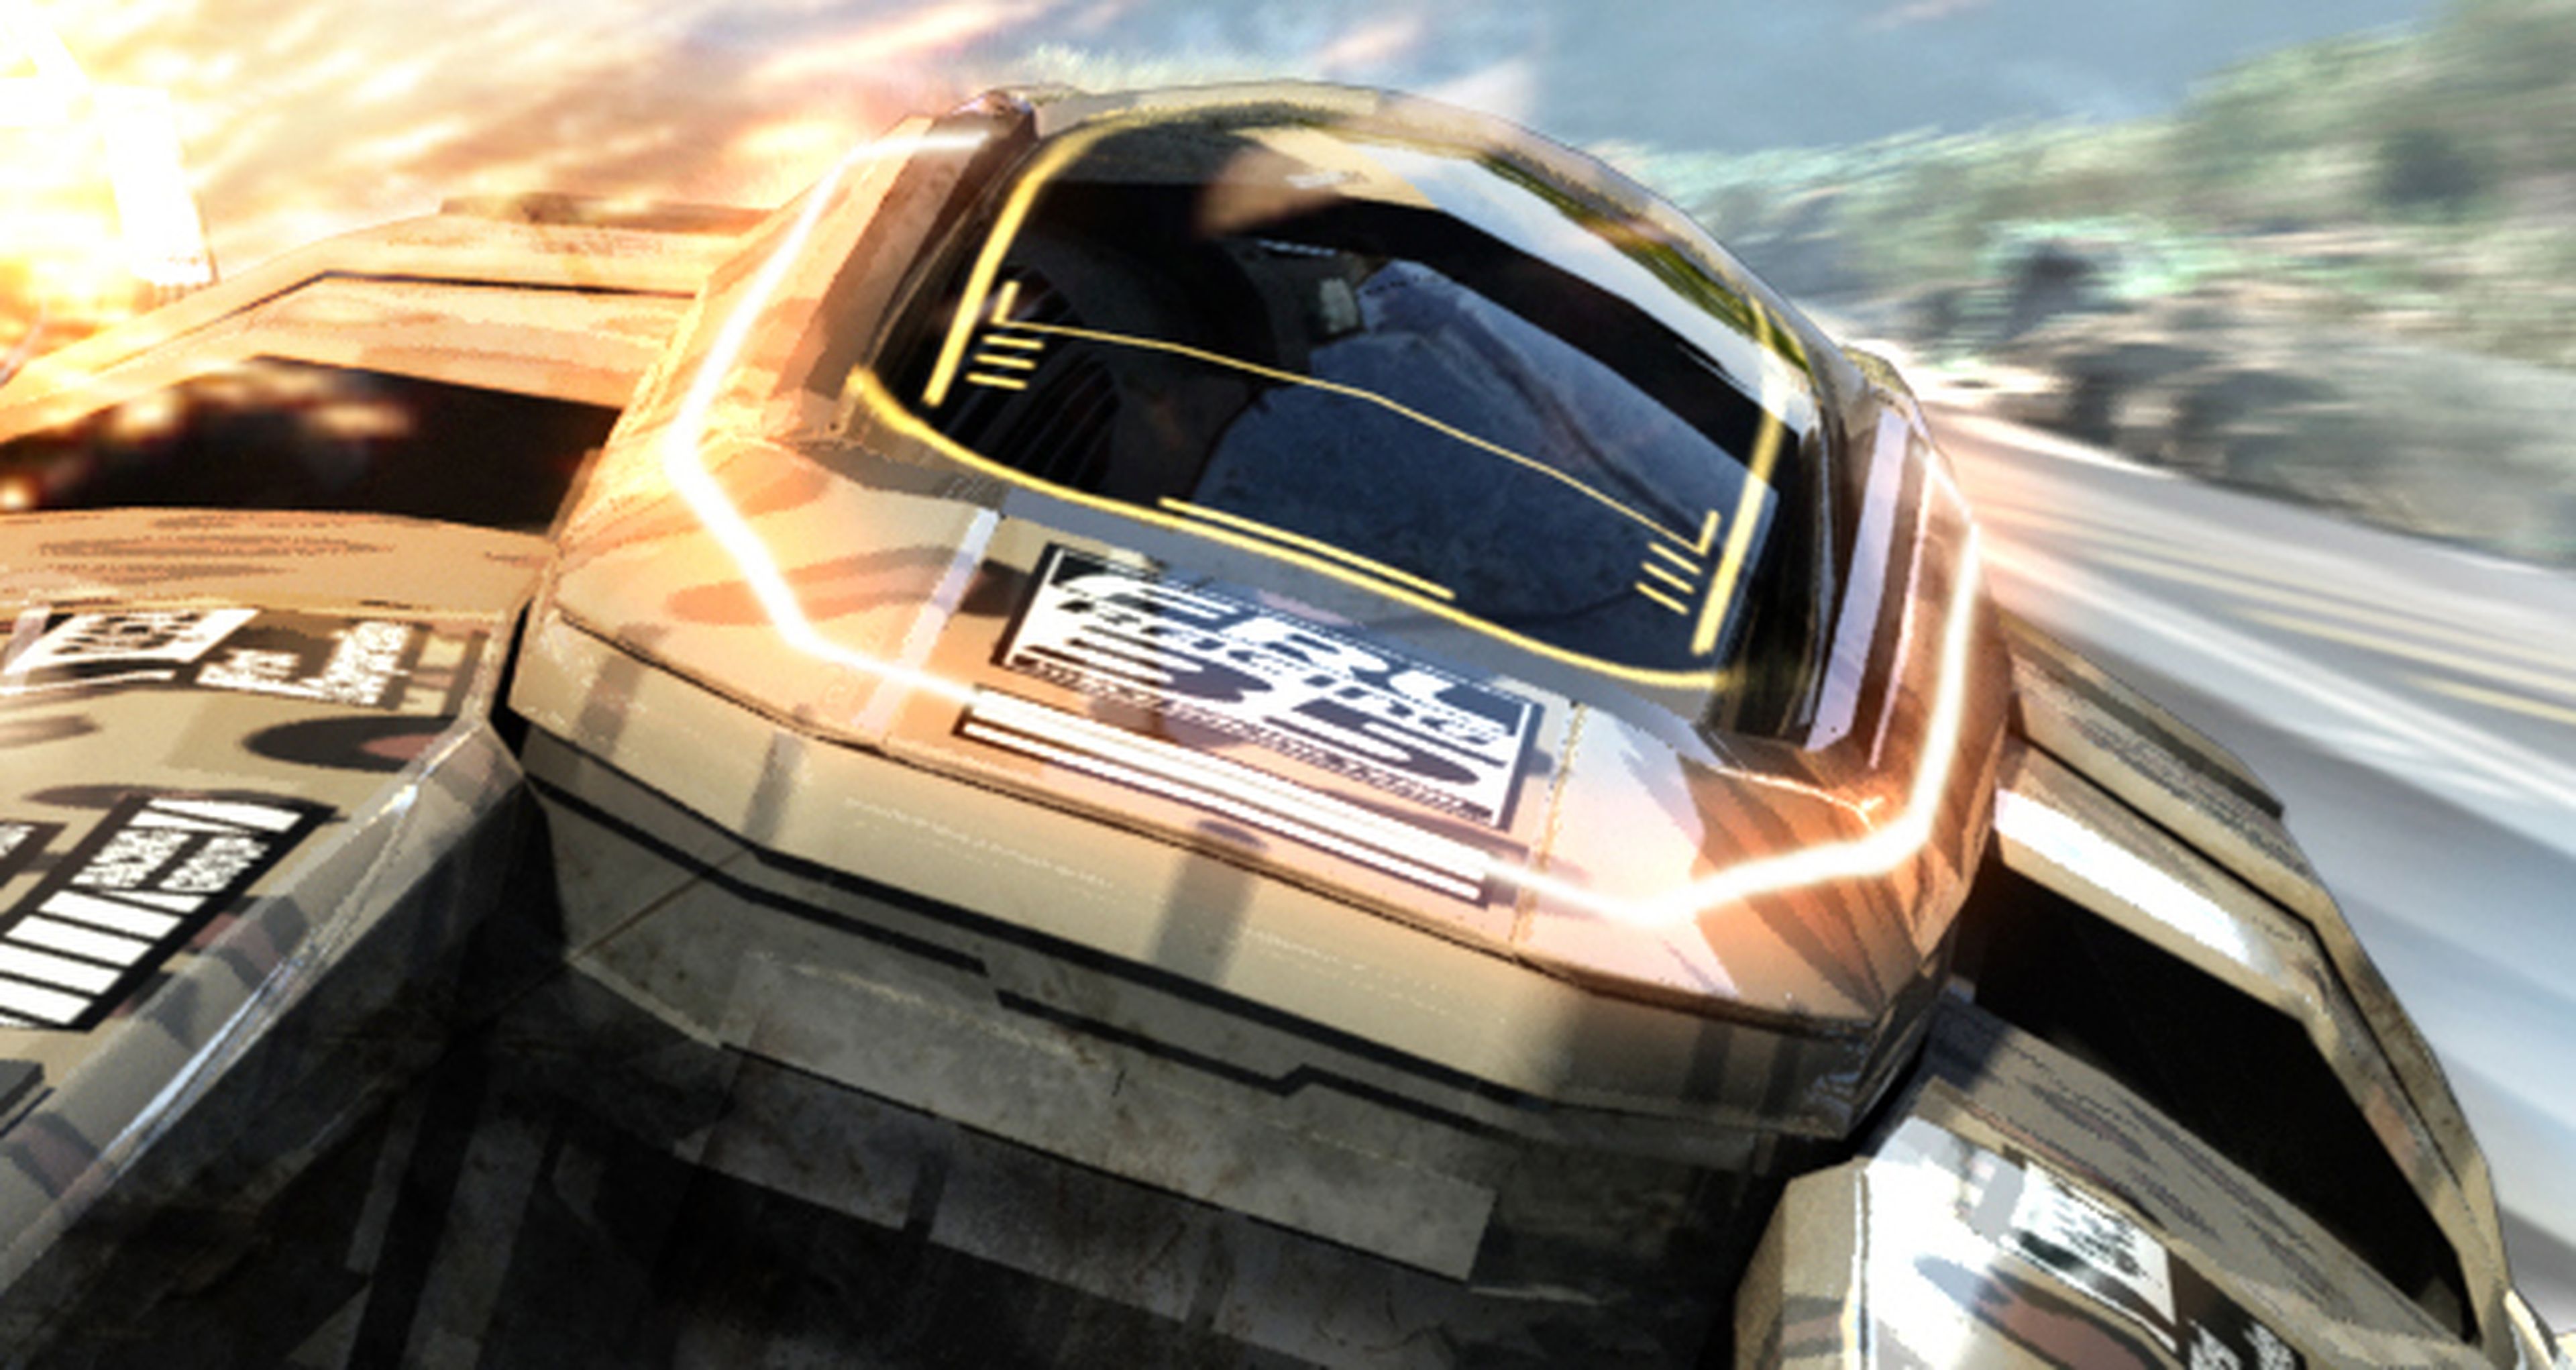 FAST Racing Neo para Wii U, nuevo gameplay